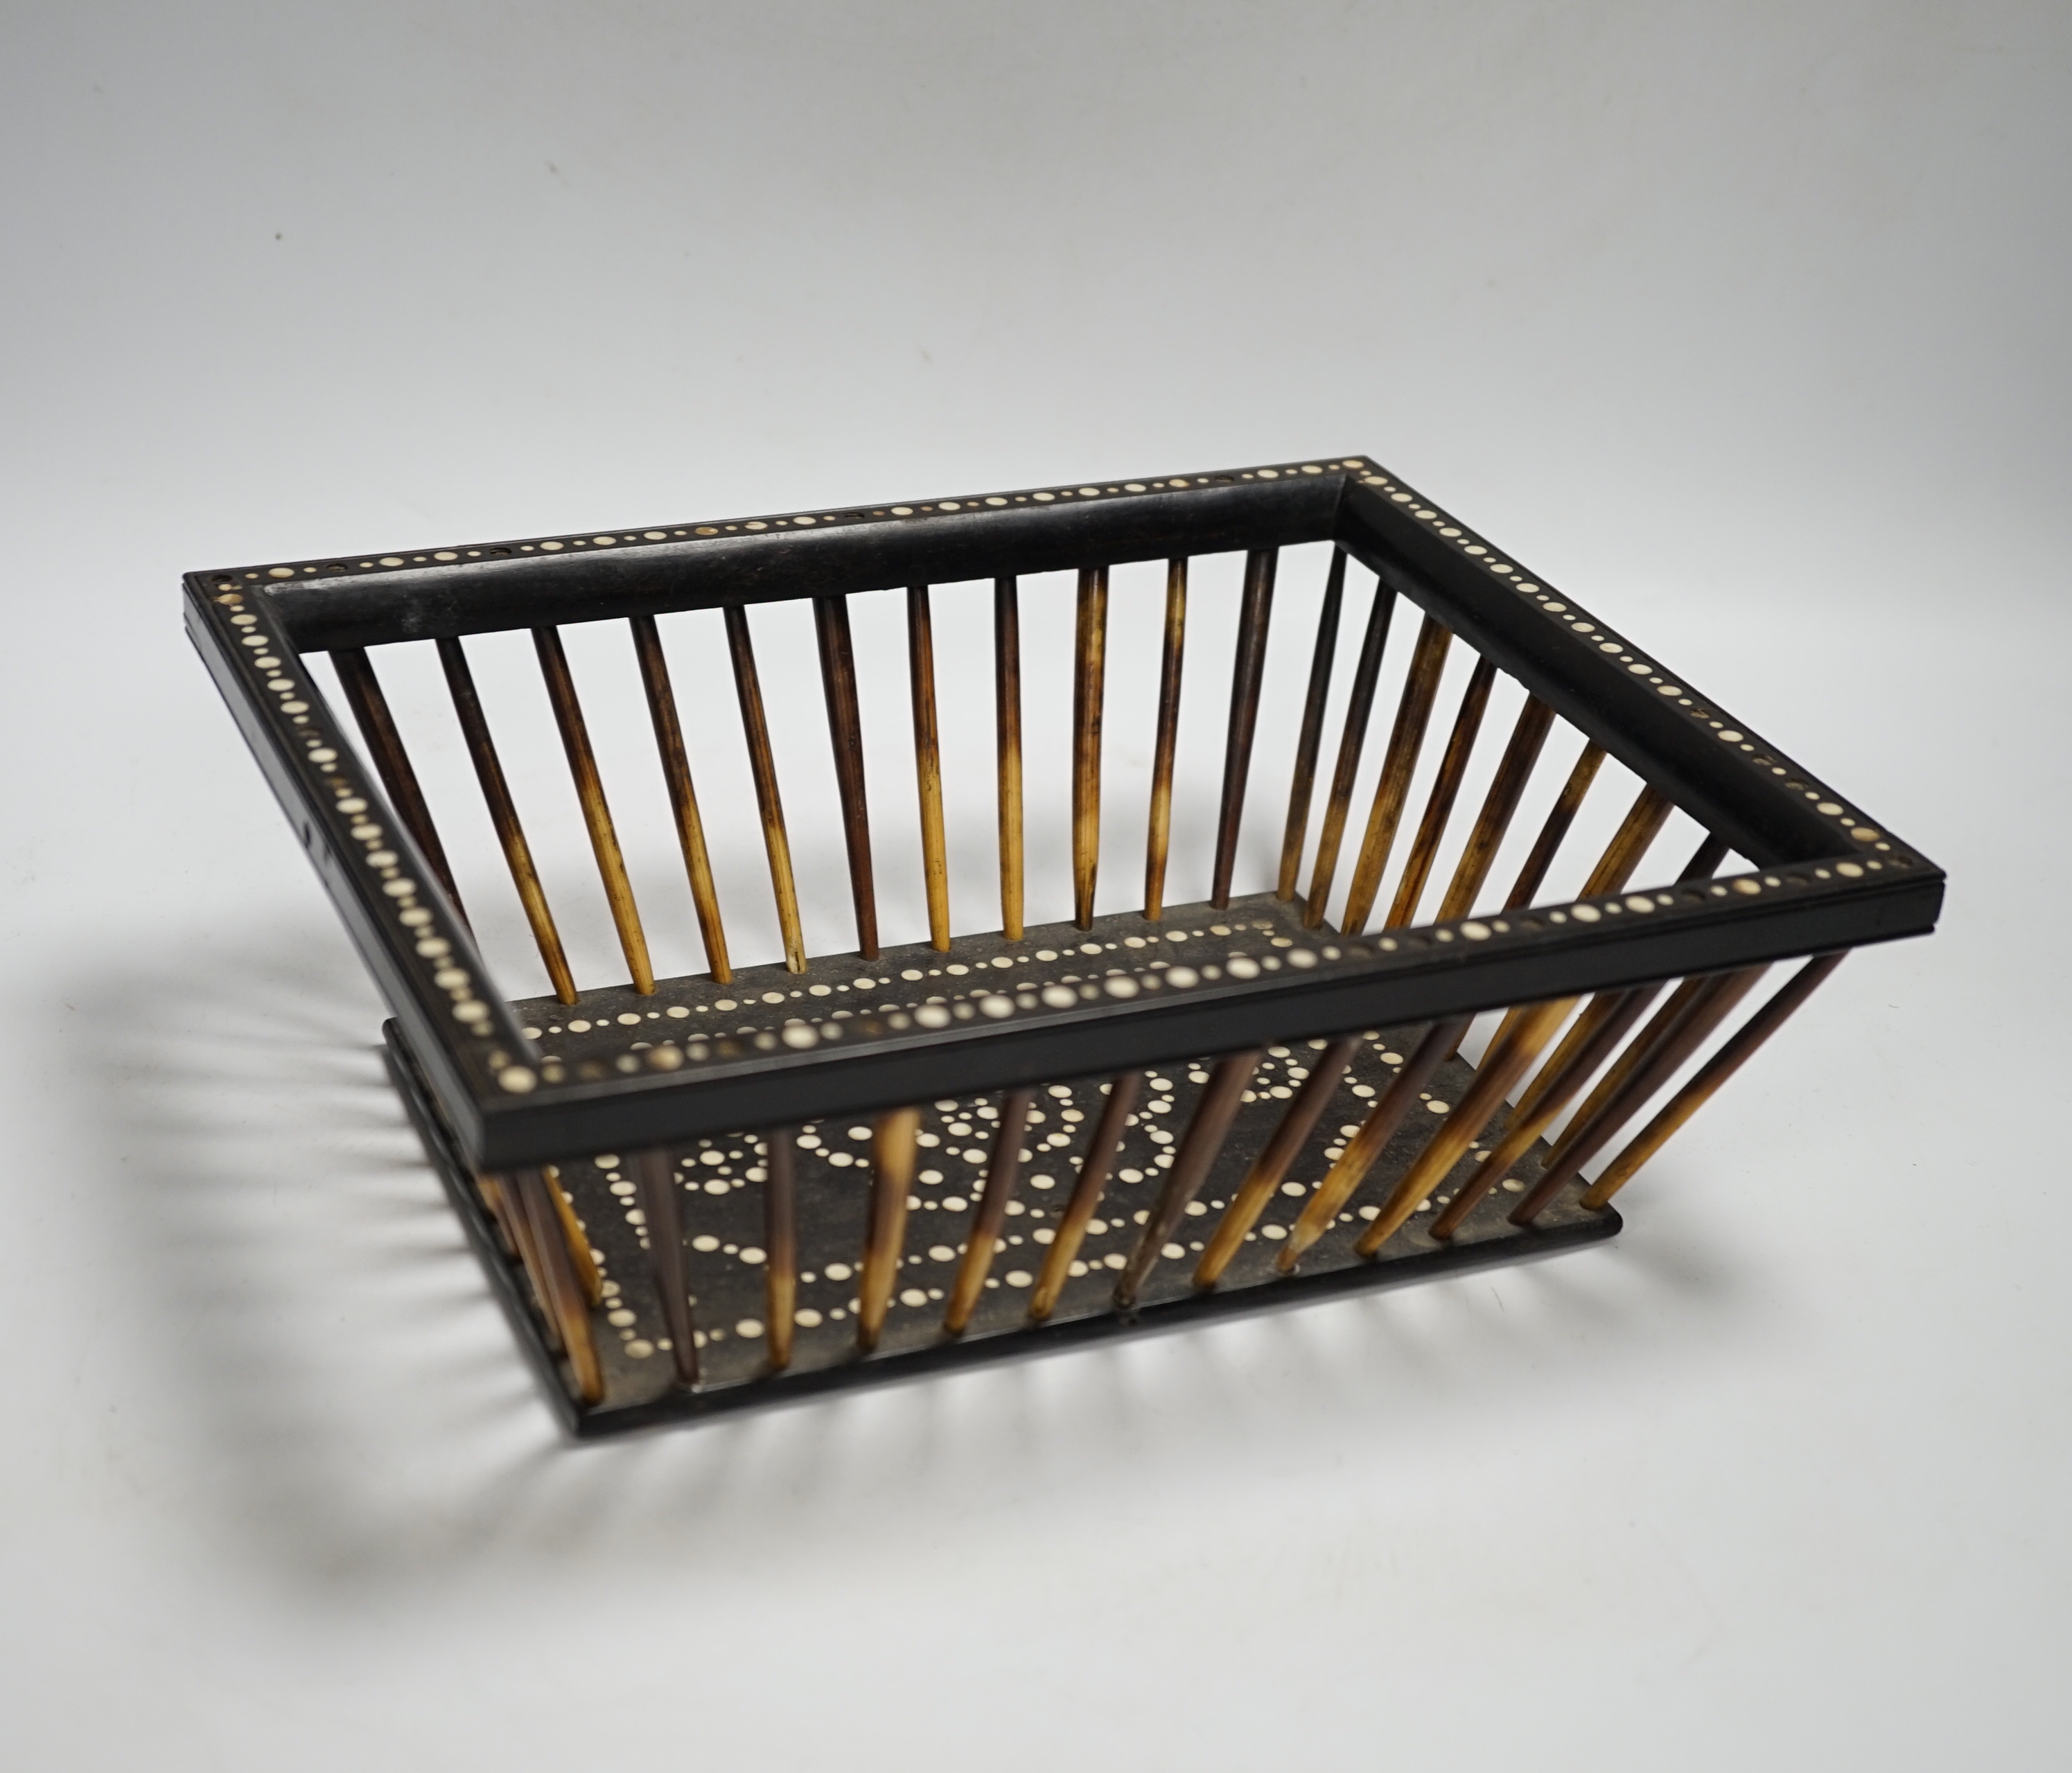 A 19th century Sri Lankan porcupine quill basket, 26 x 20.5 x 9cm